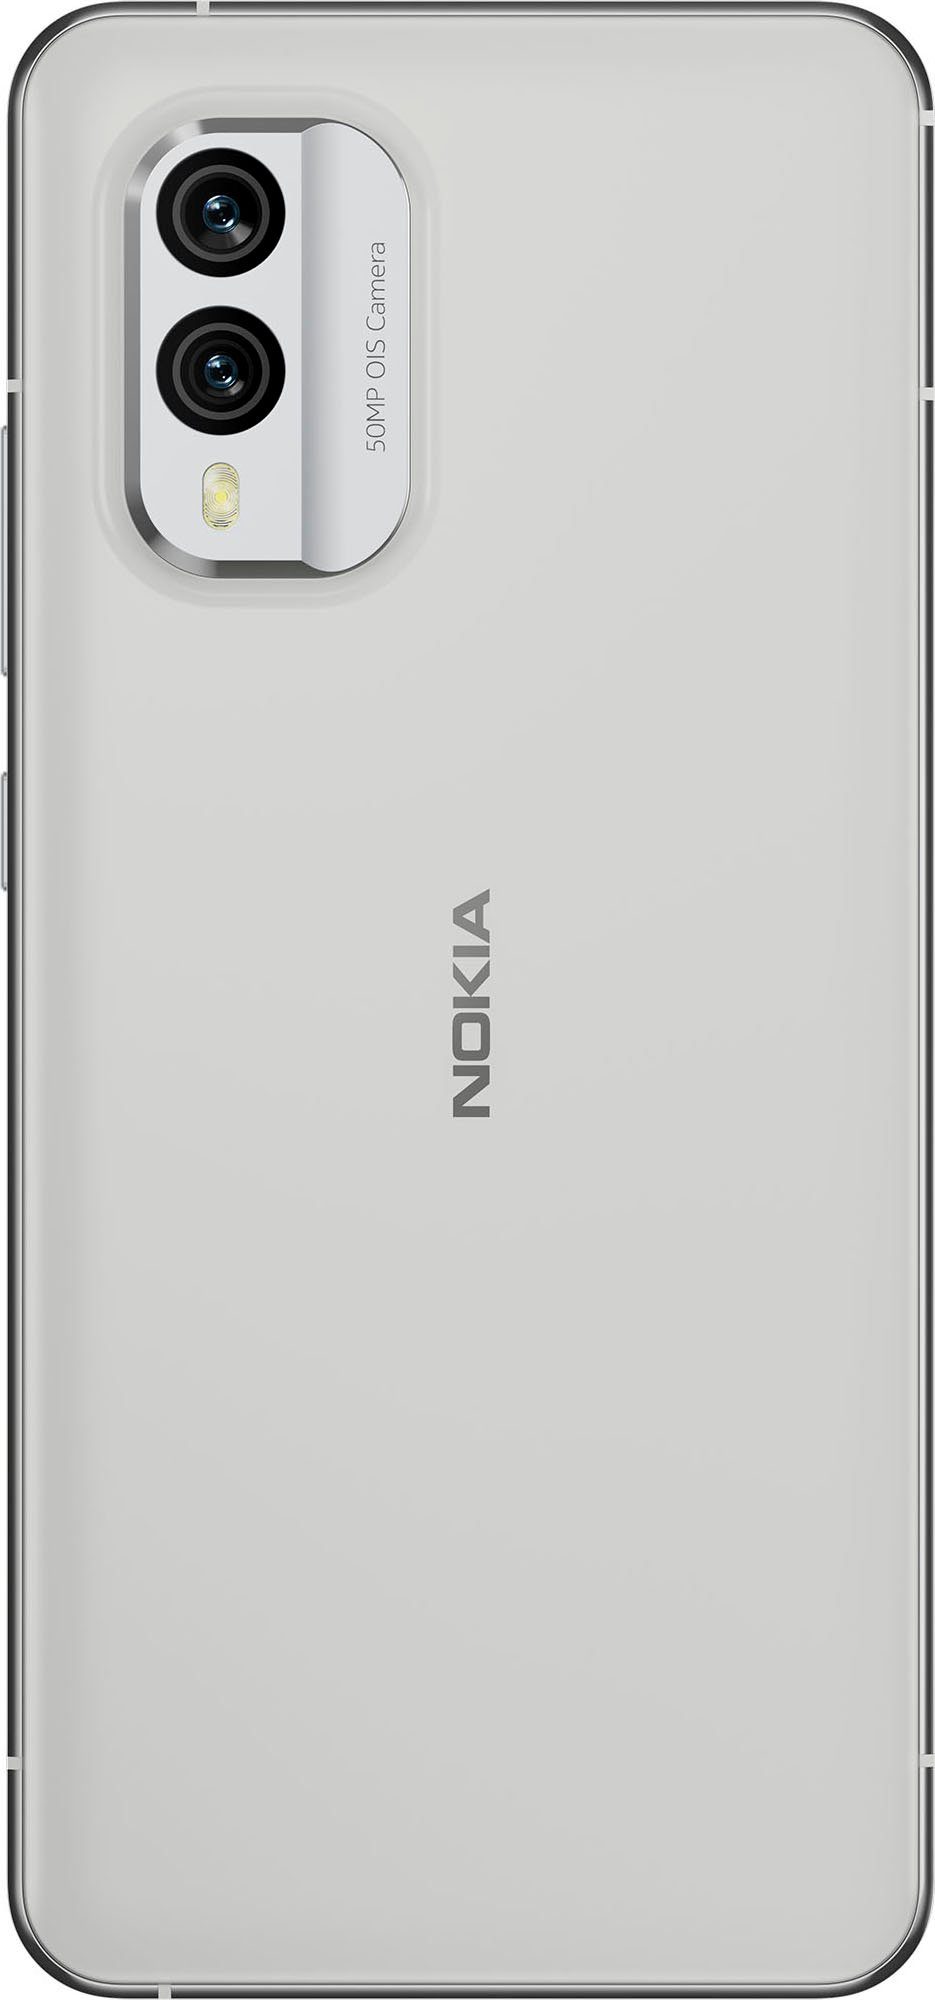 Ice MP 256 Nokia White Kamera) GB (16,33 Smartphone X30 50 5G Zoll, Speicherplatz, cm/6,43